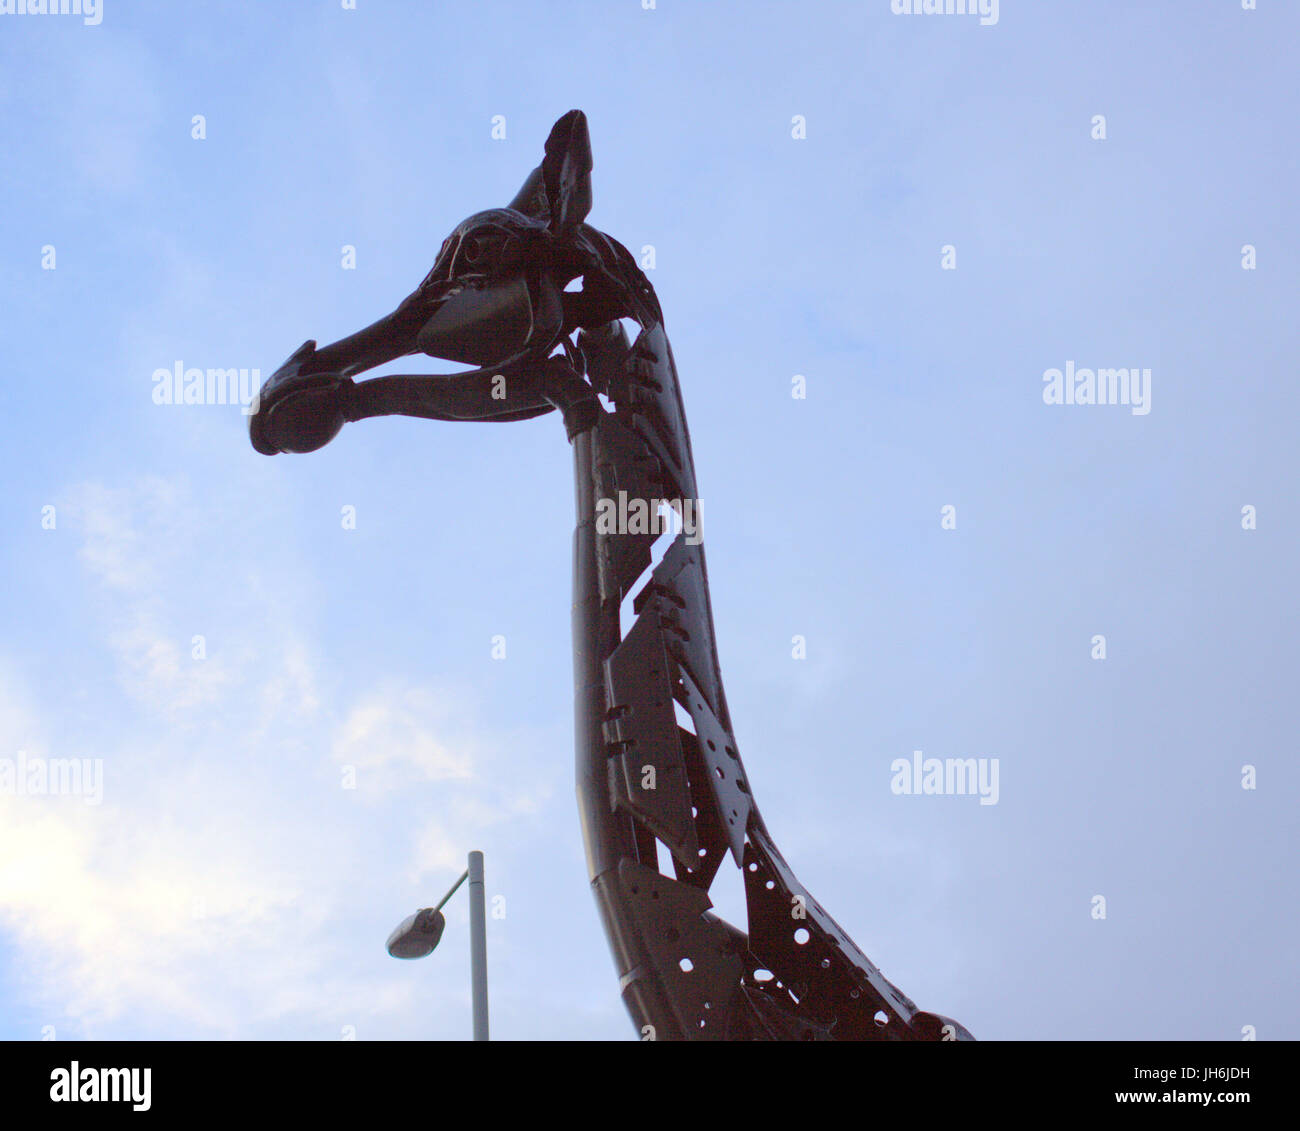 giraffe art work statues necks Edinburgh Stock Photo